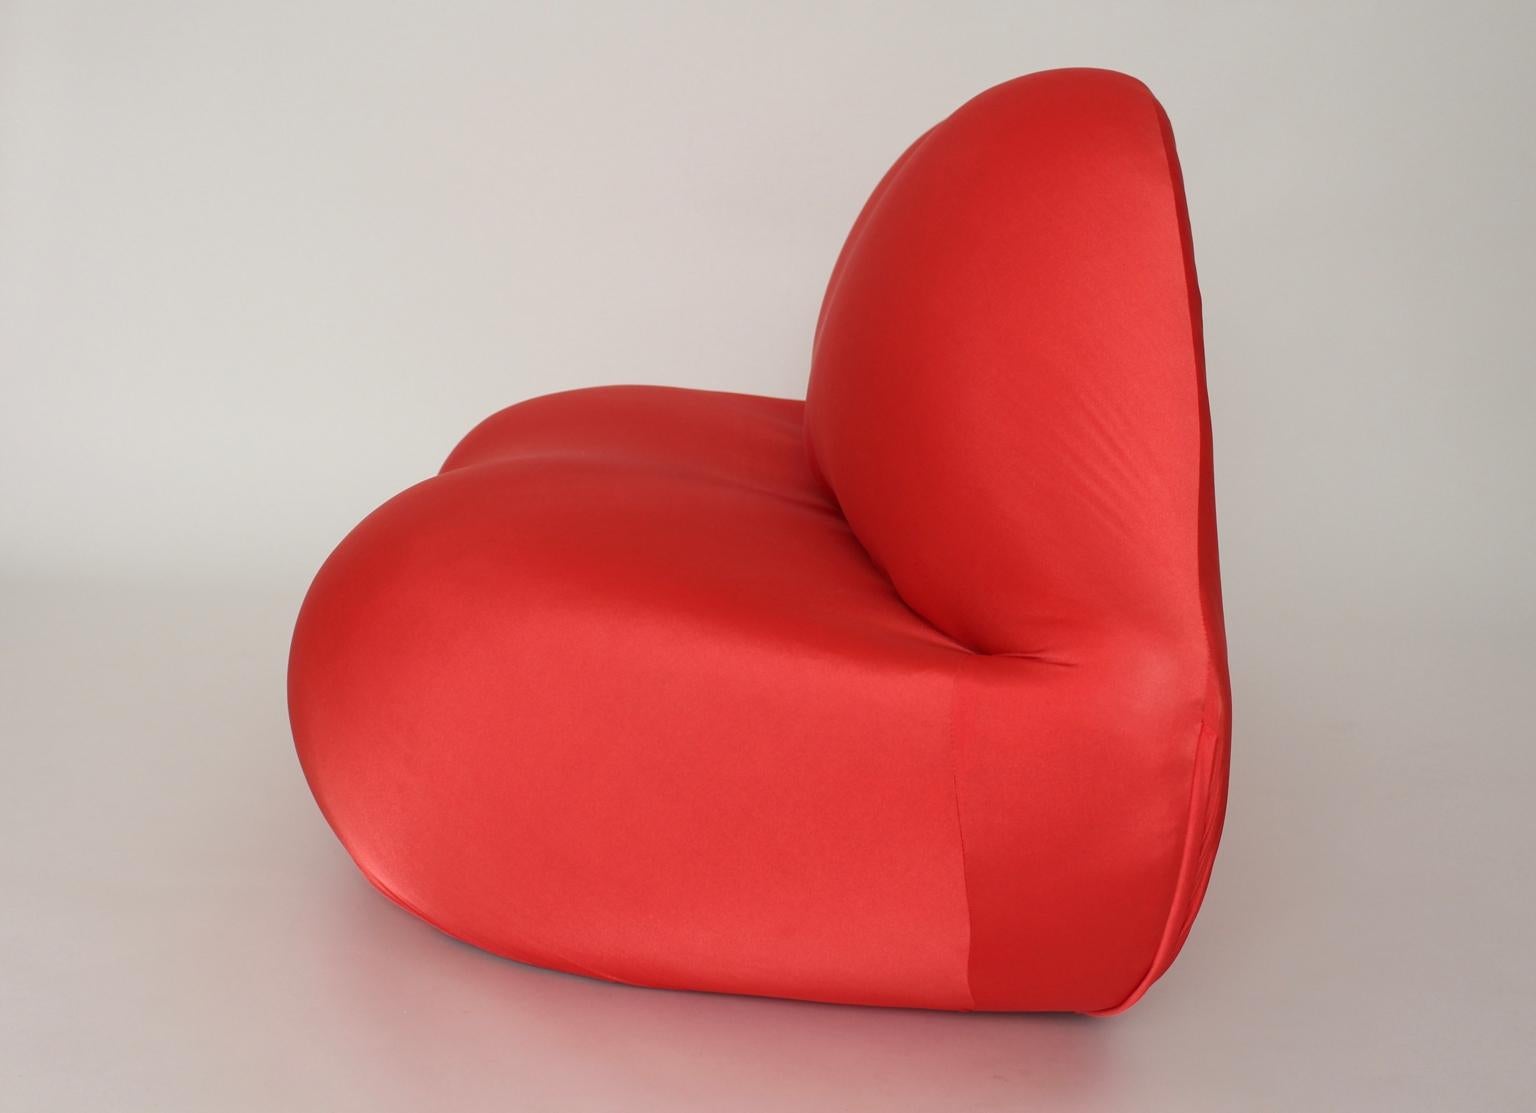 Red La Bocca Pop Art Lips Vintage Sofa Attr. to Studio 65 for Gufram Italy 1970s For Sale 4